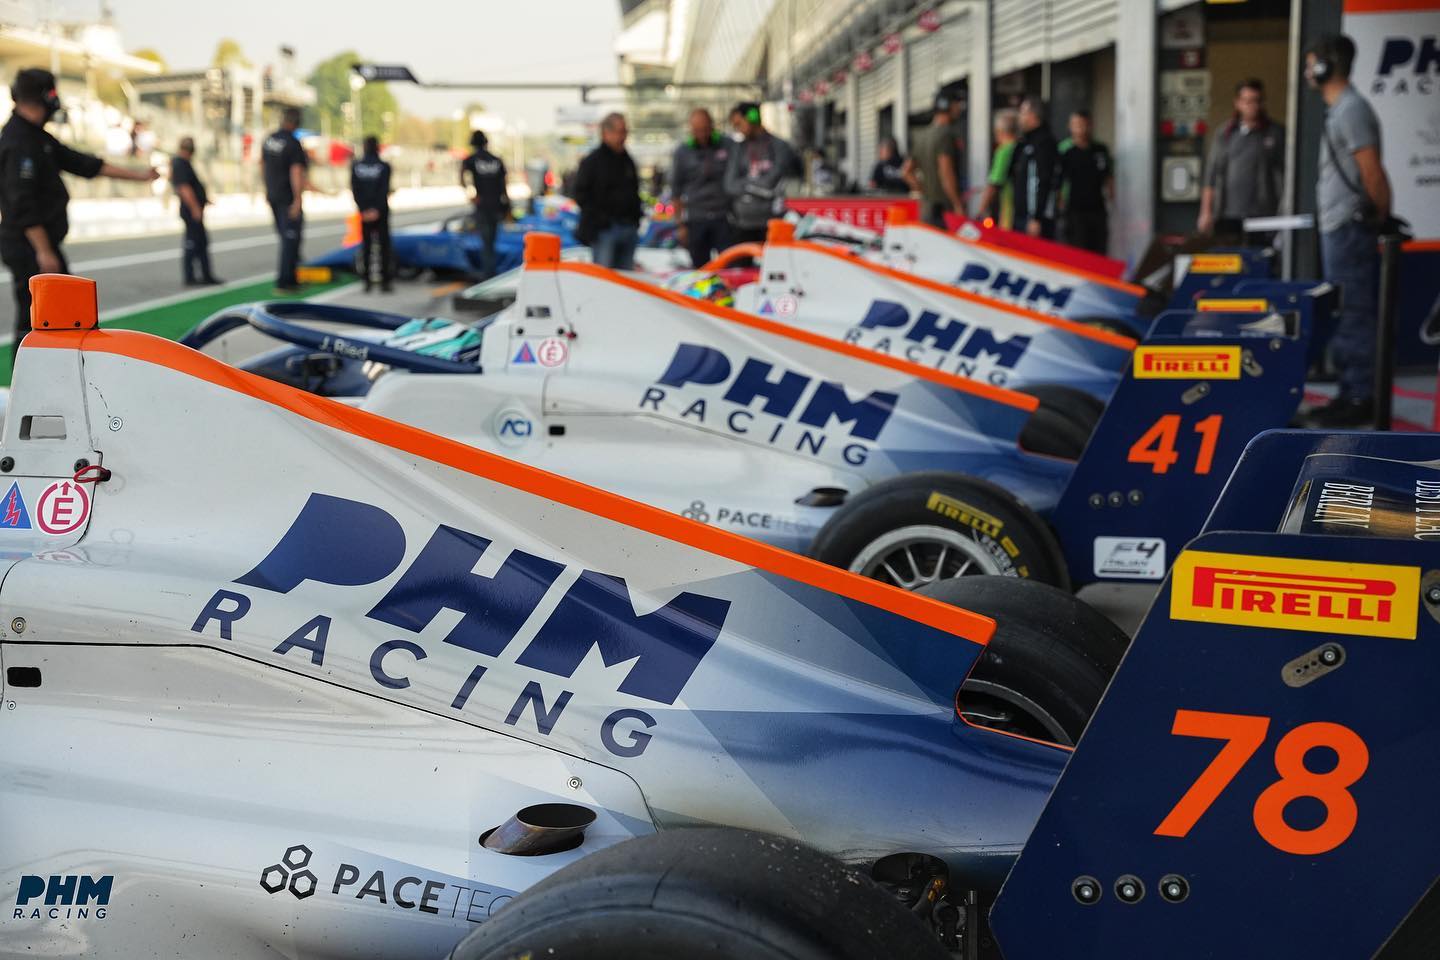 PHM Racing, F2, F3